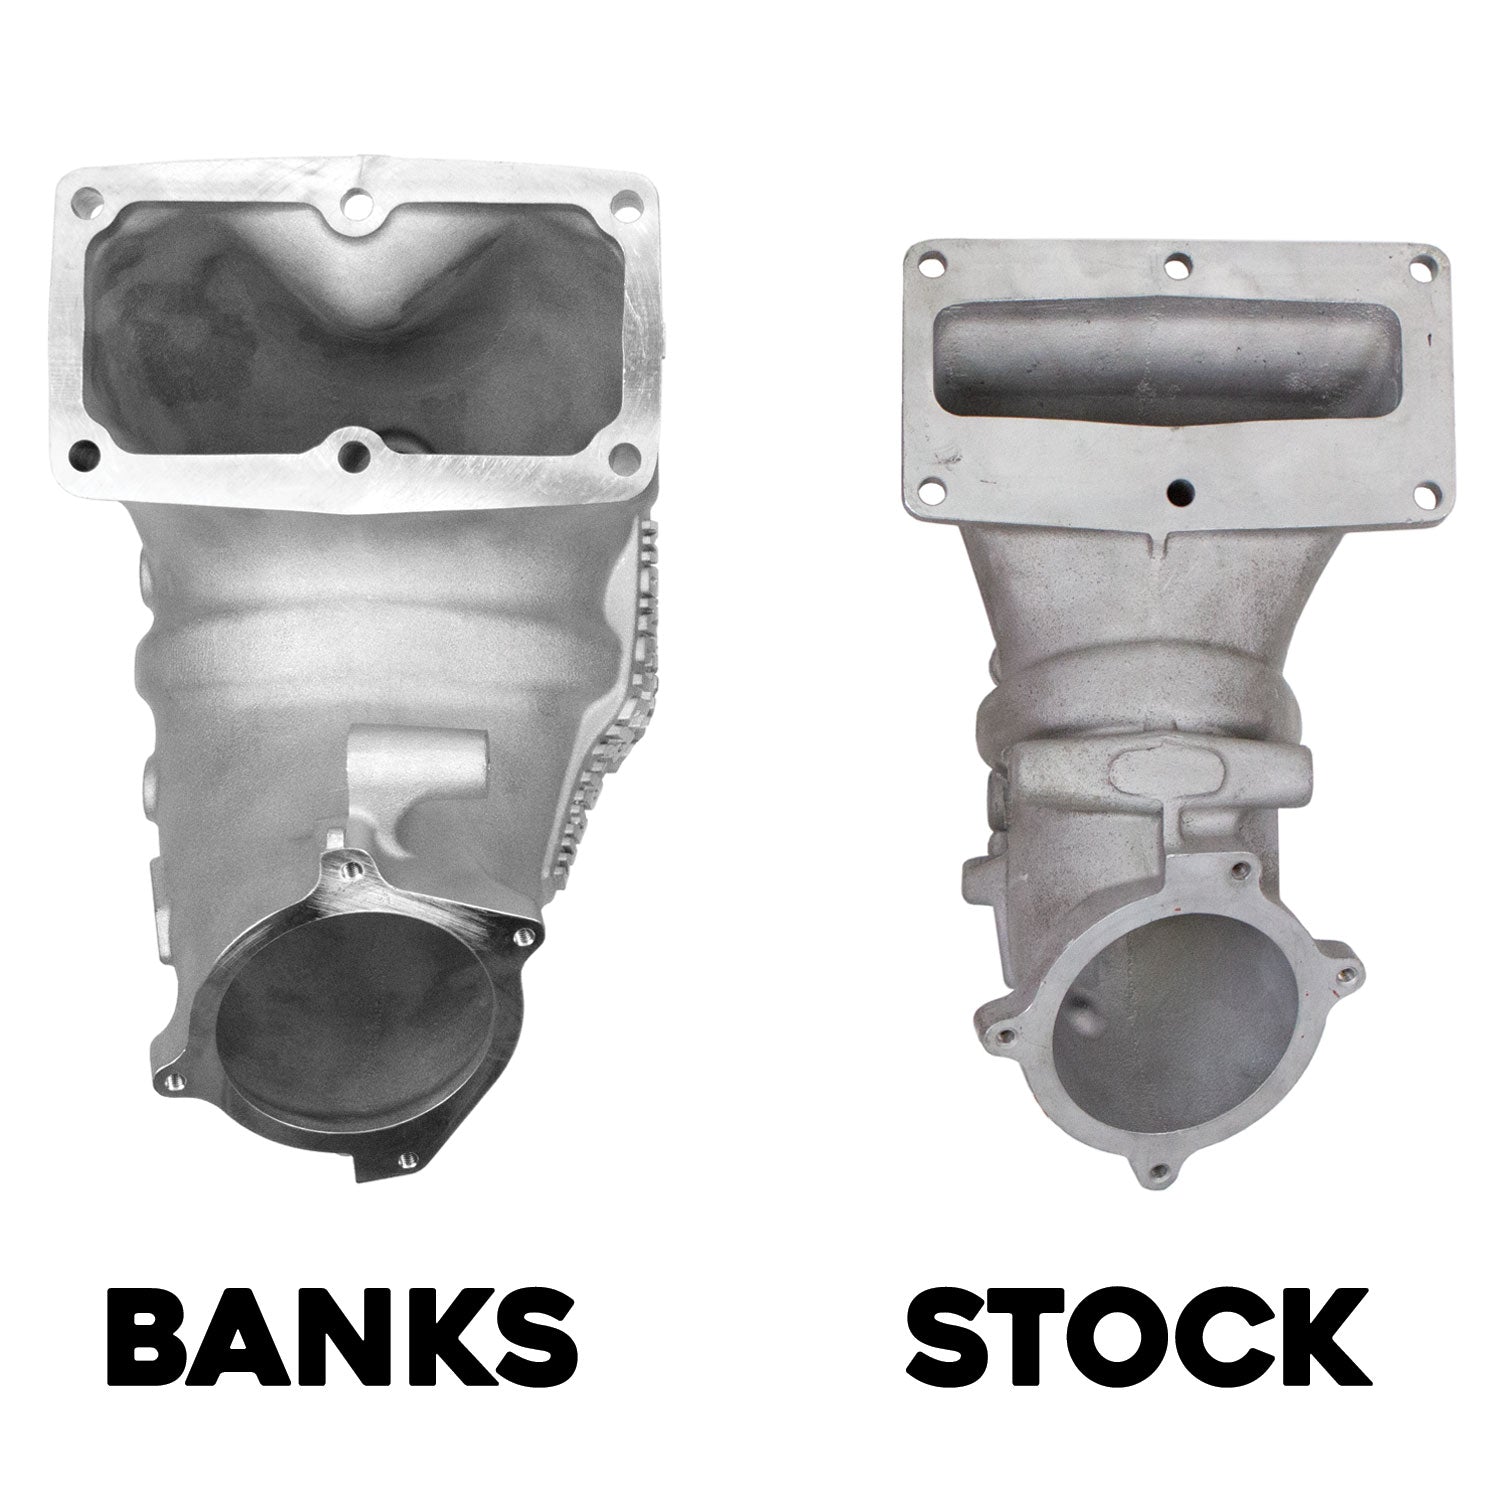 Banks Monster-Ram intake manifold comparison